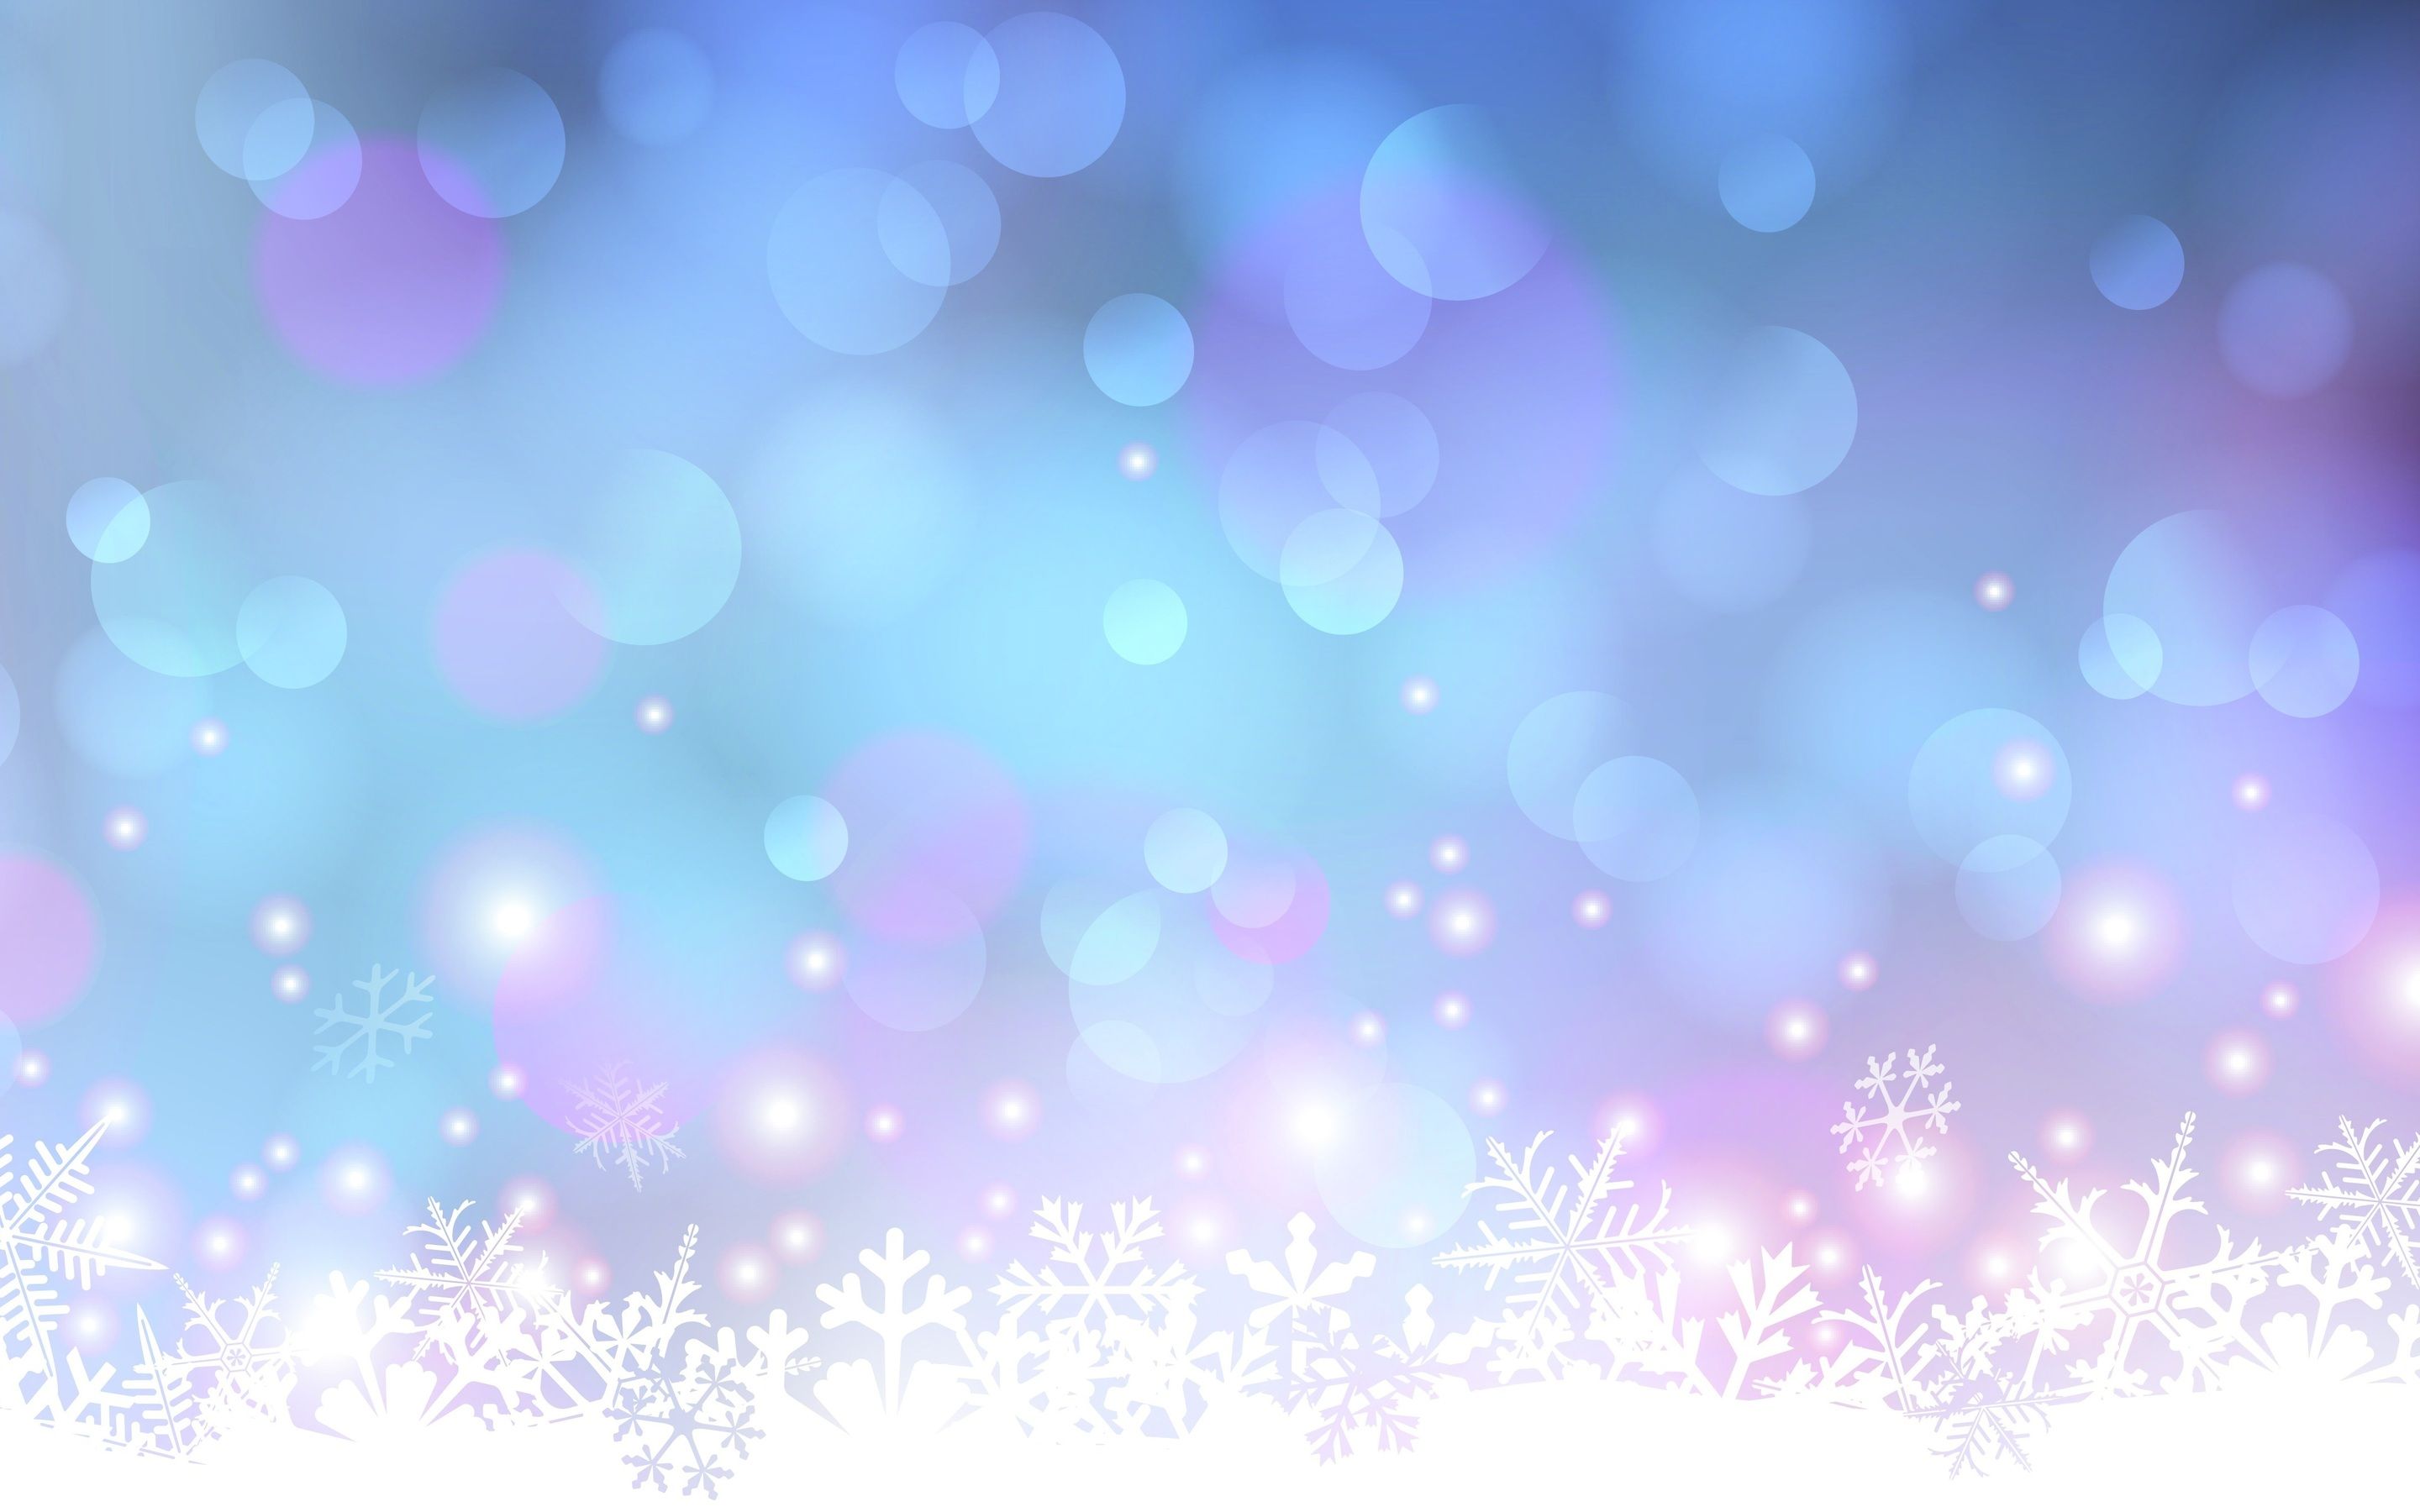 Christmas background, photo, picture, image. Snowflake wallpaper, Holiday wallpaper, Holiday background image